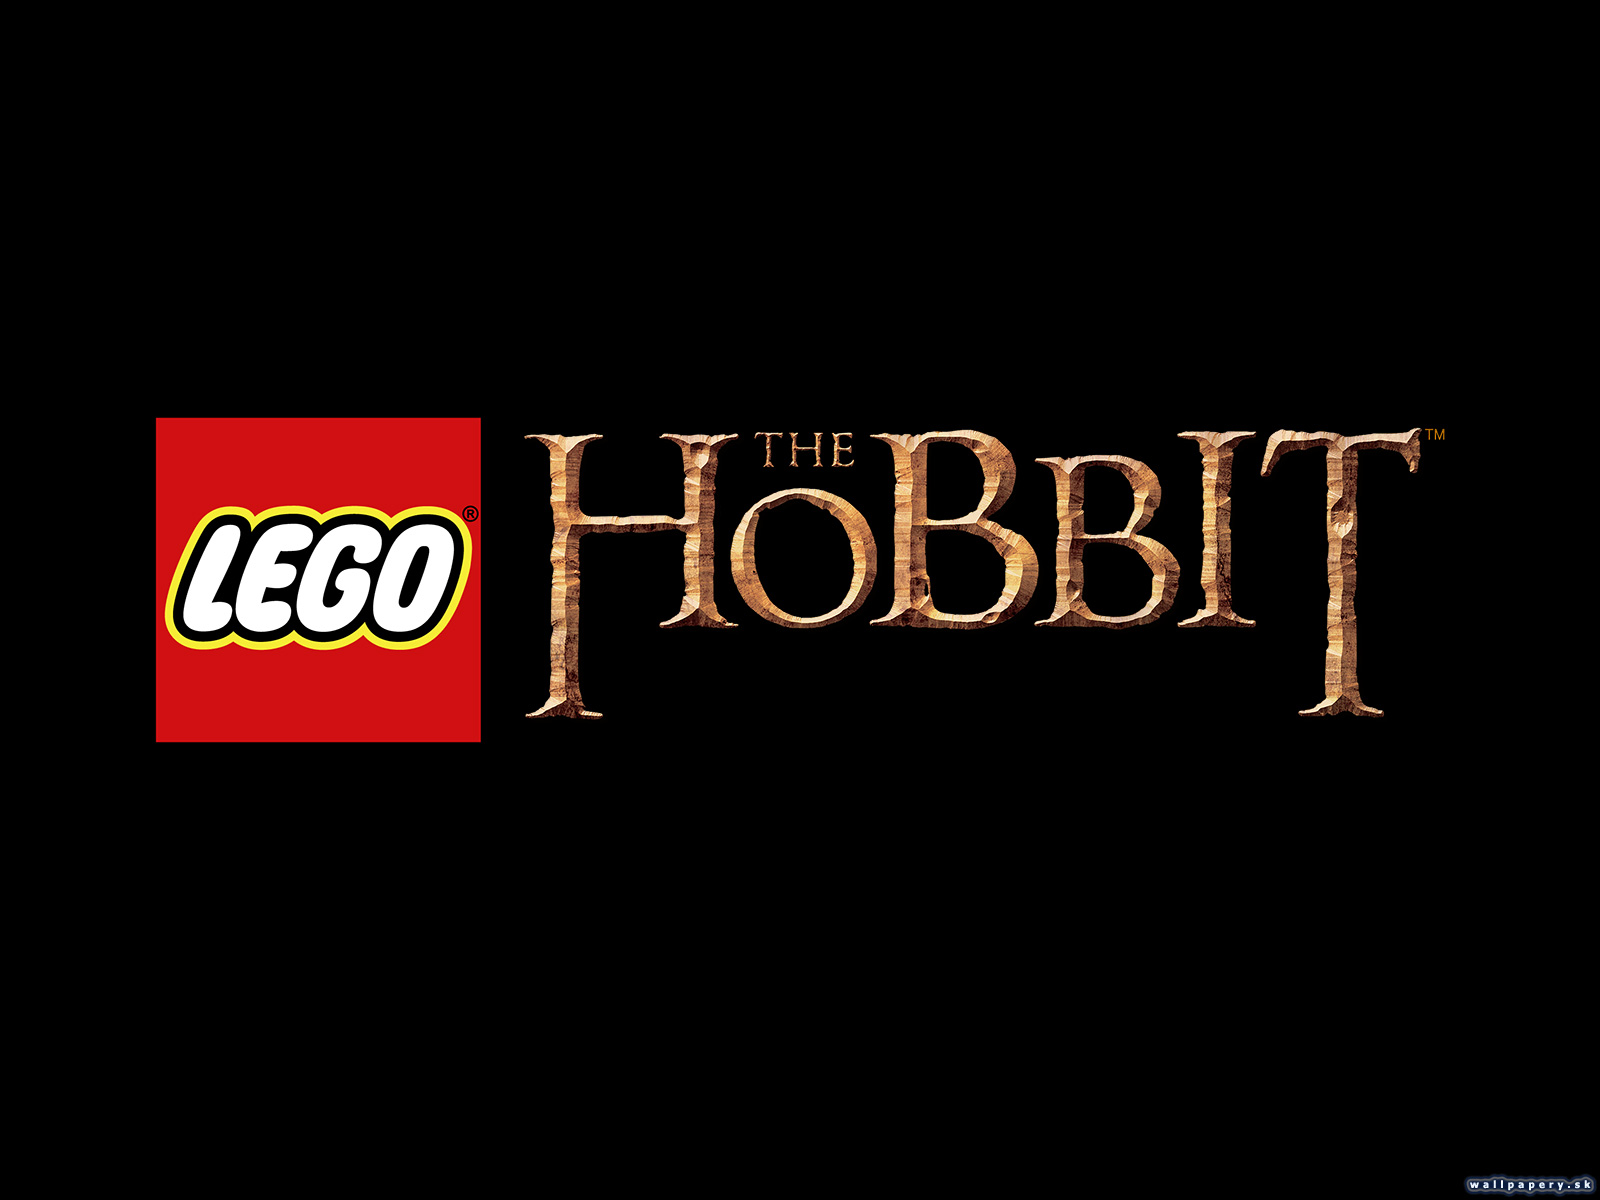 LEGO: The Hobbit - wallpaper 5